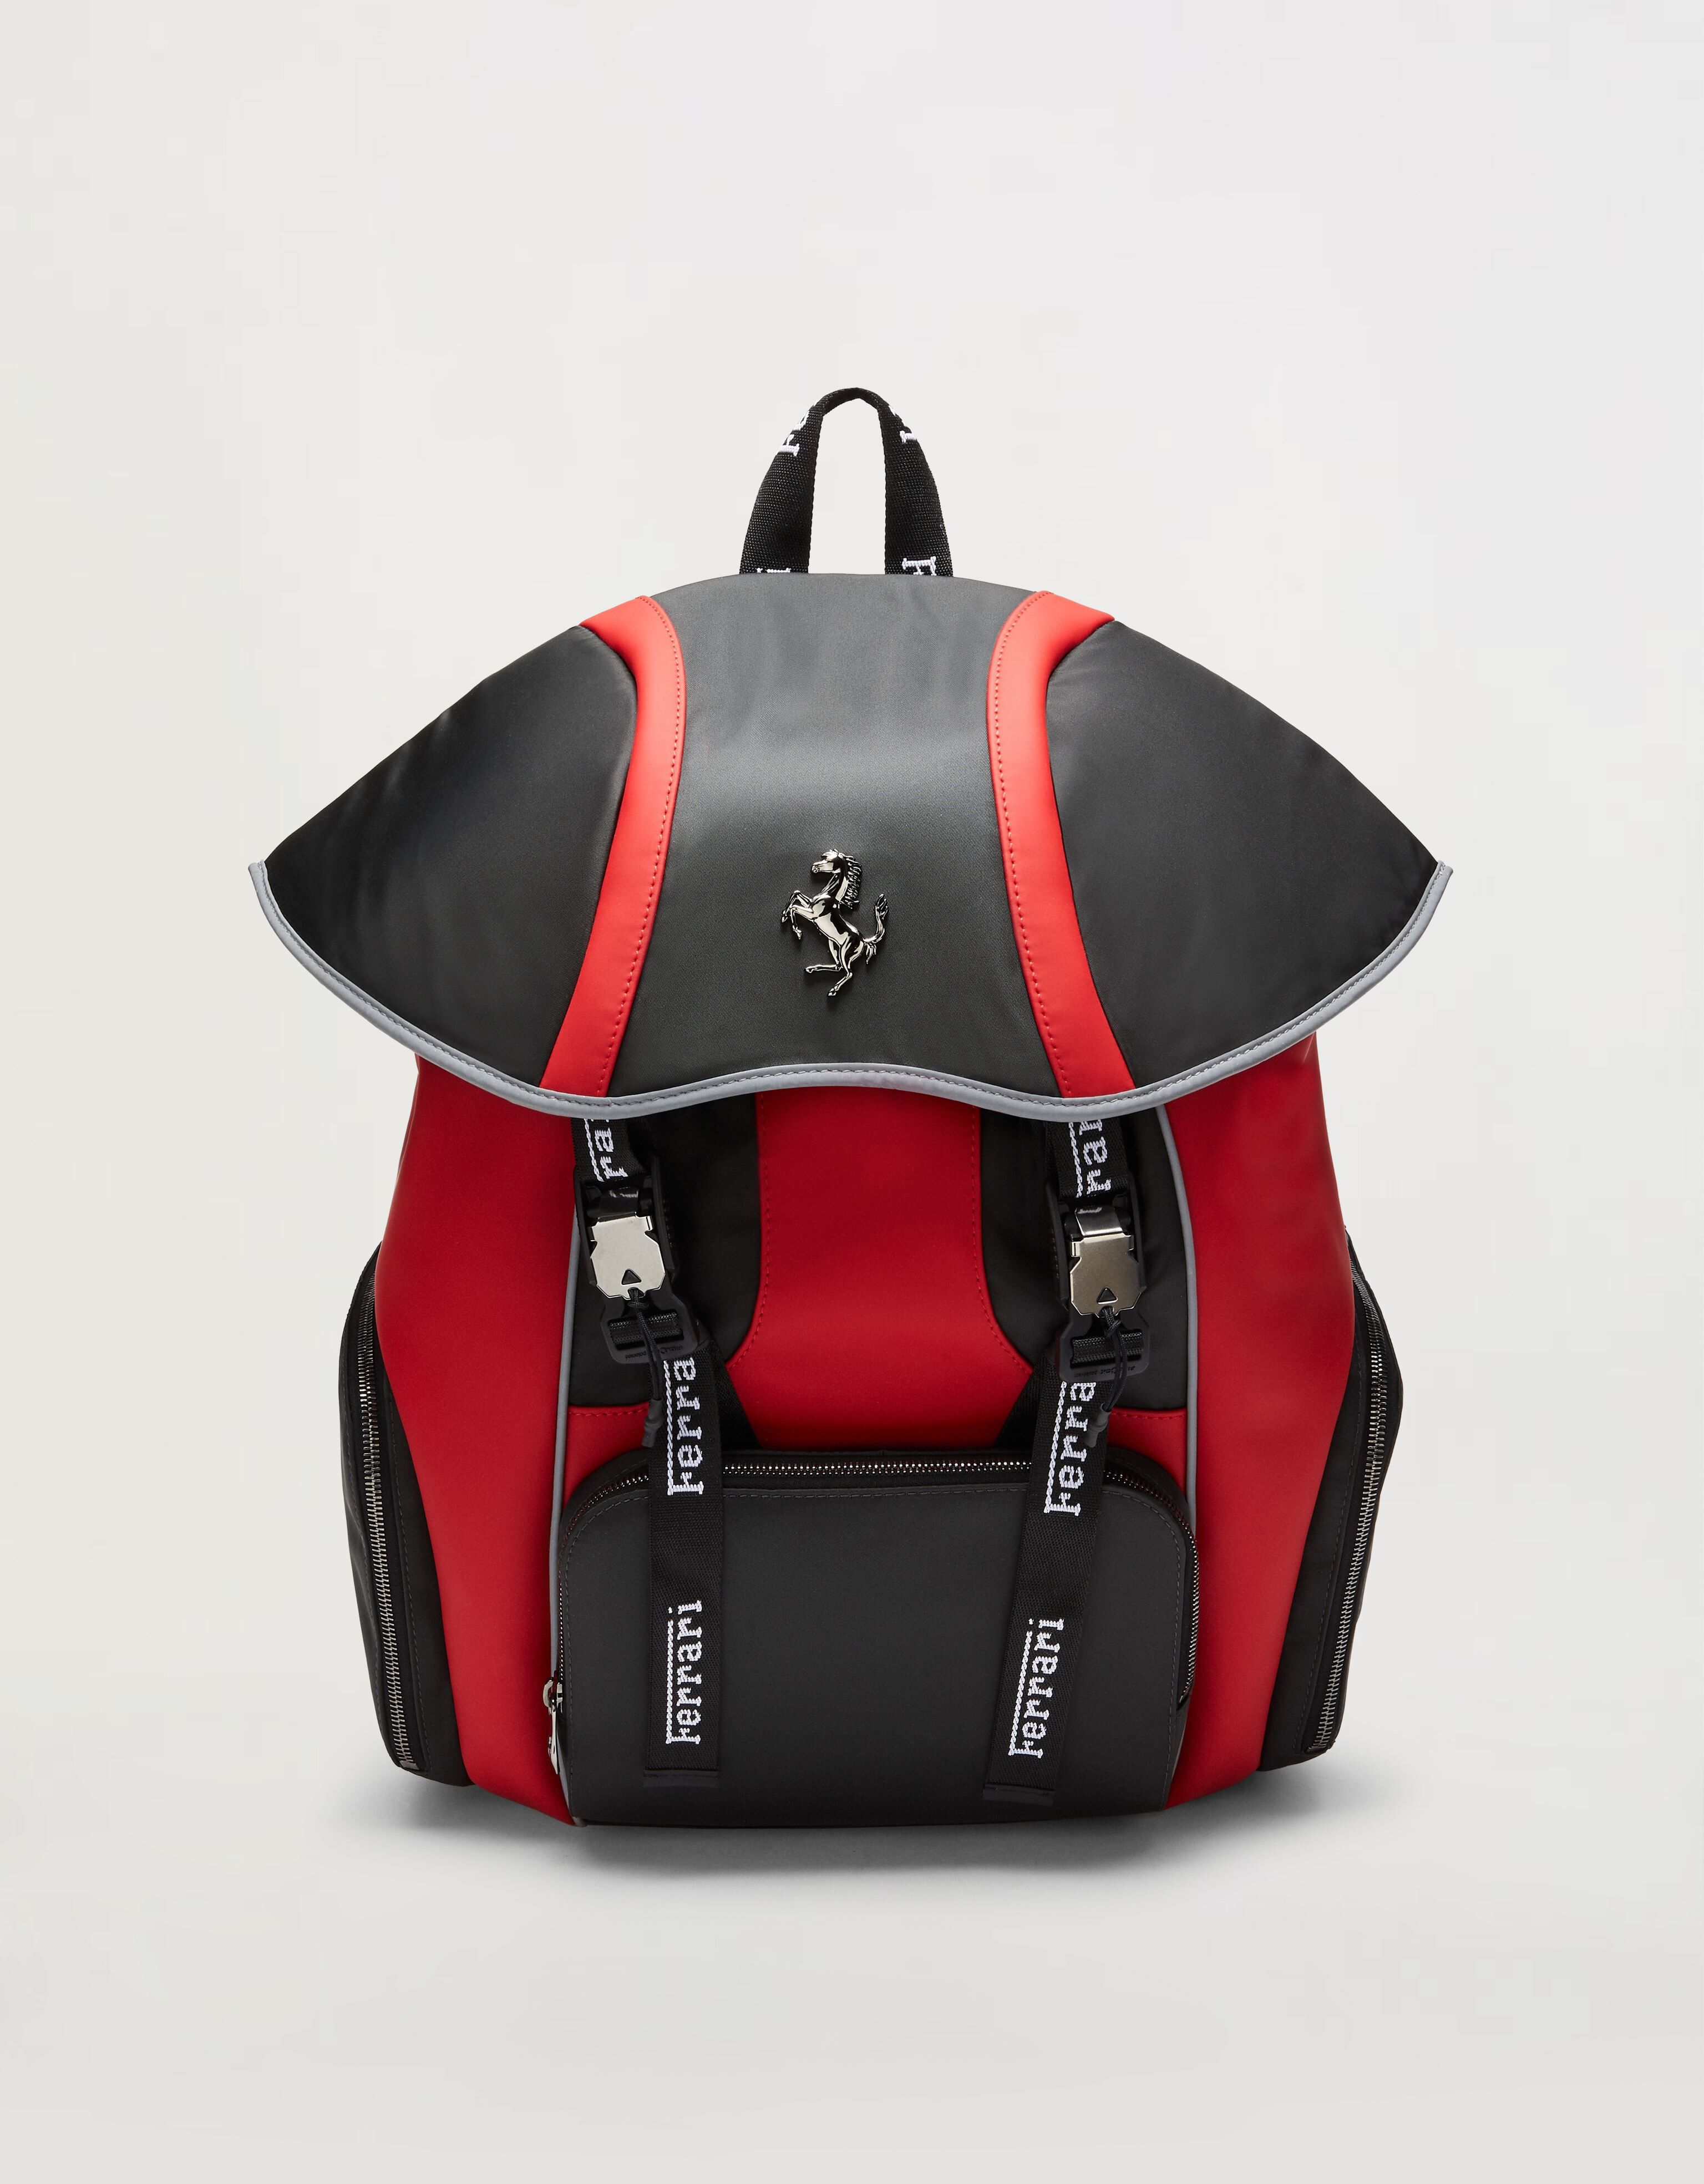 Ferrari Leather and nylon backpack Rosso Corsa 47434f